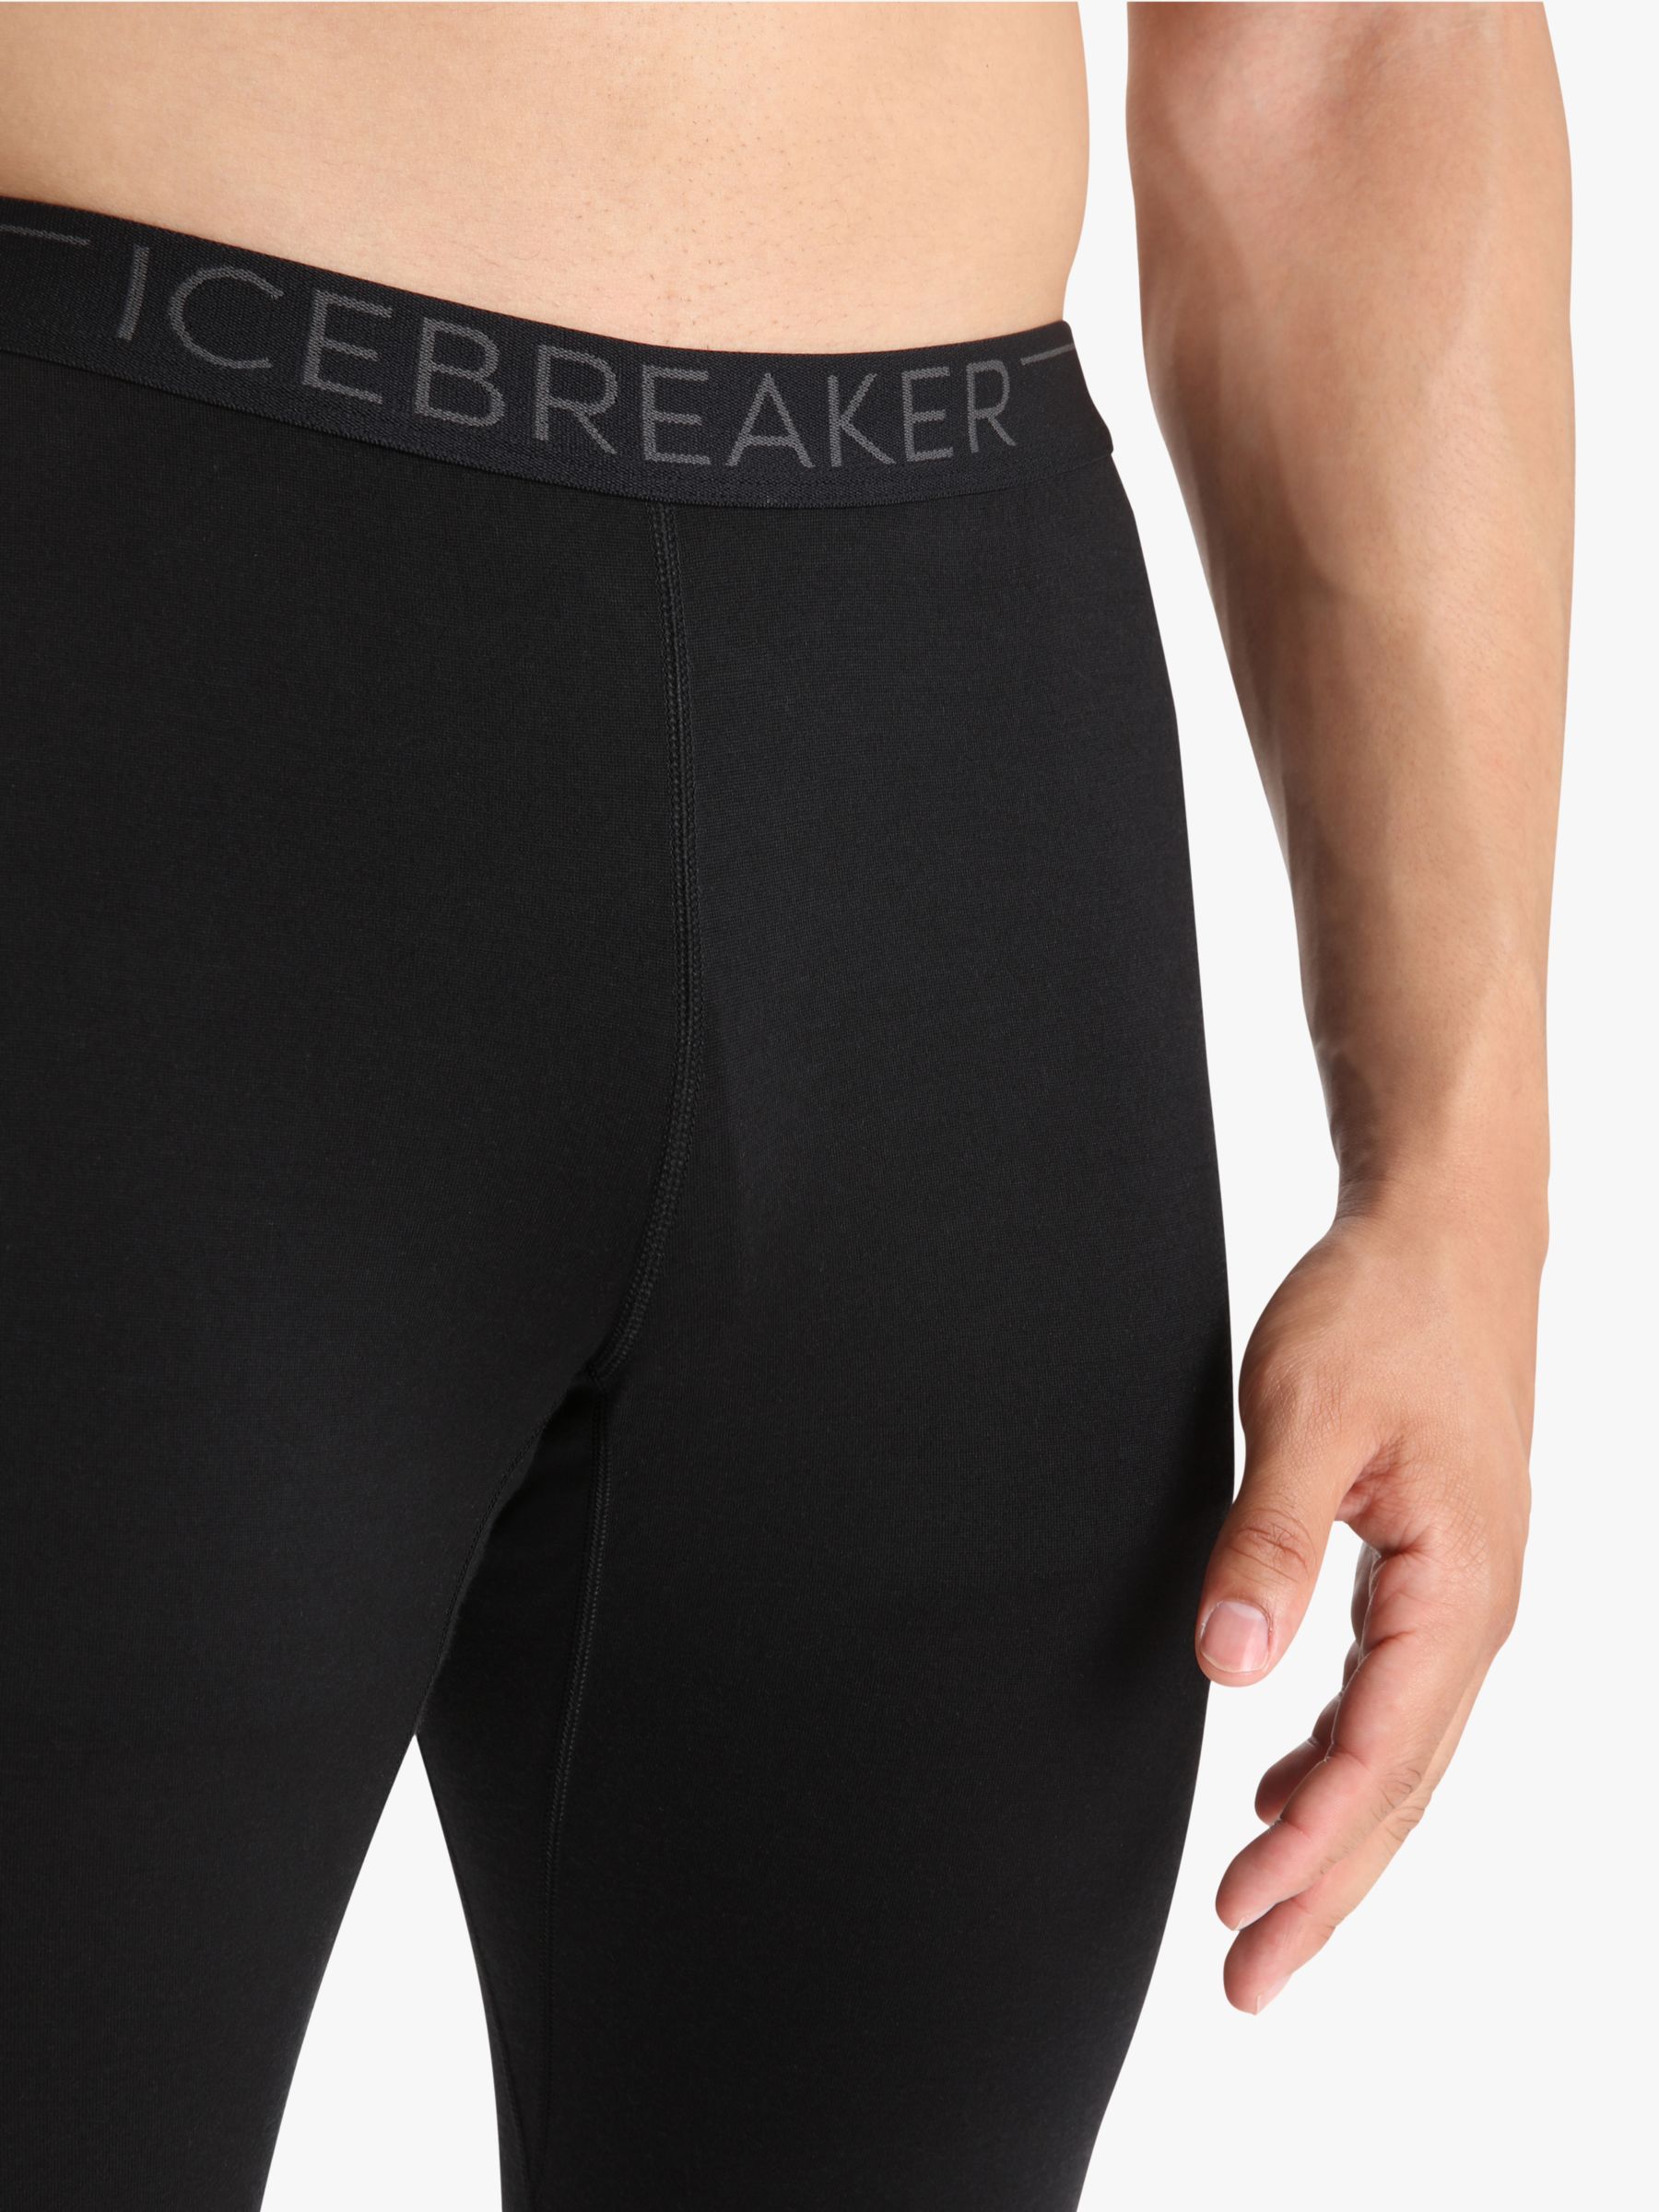 Buy Icebreaker Men's 200 Oasis Base Layer Leggings Online at johnlewis.com